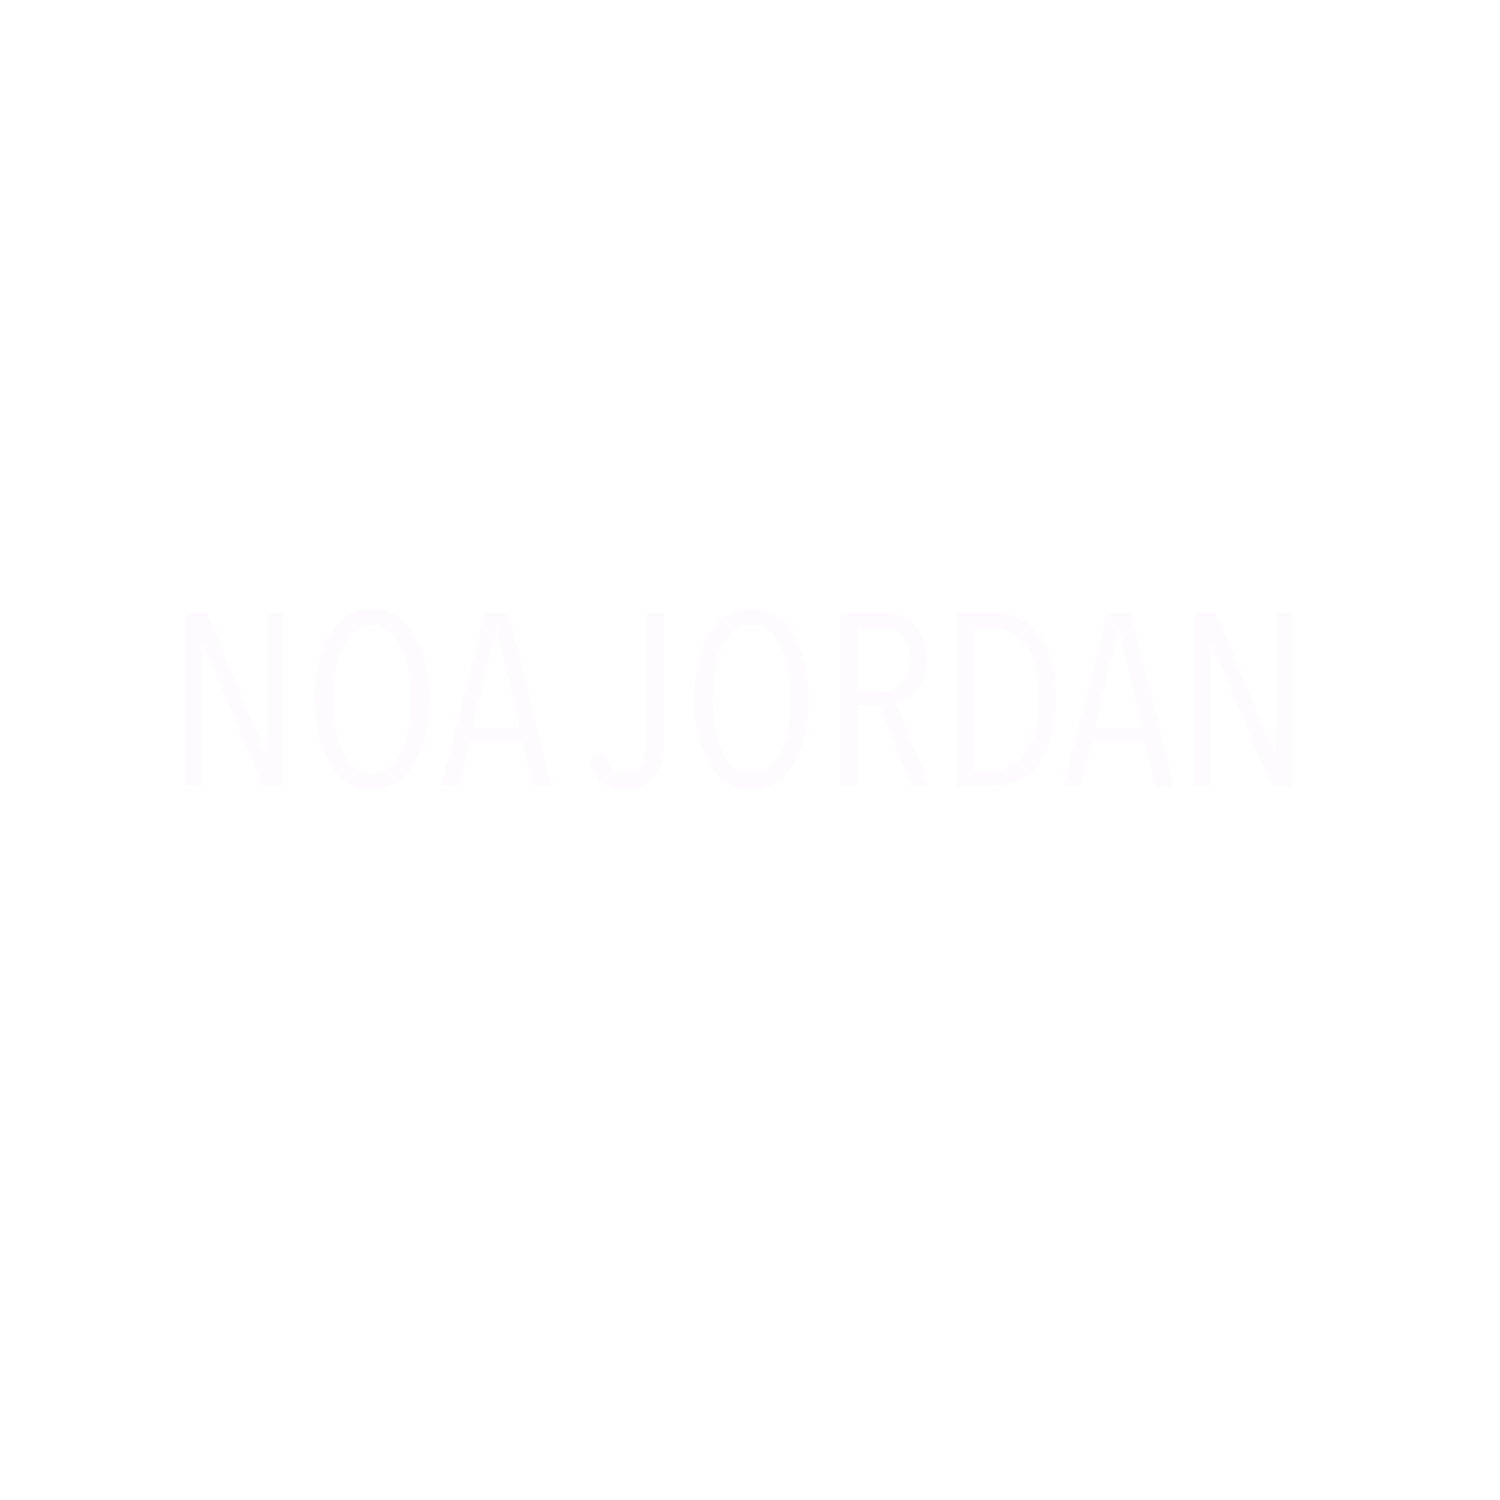 NOA JORDAN